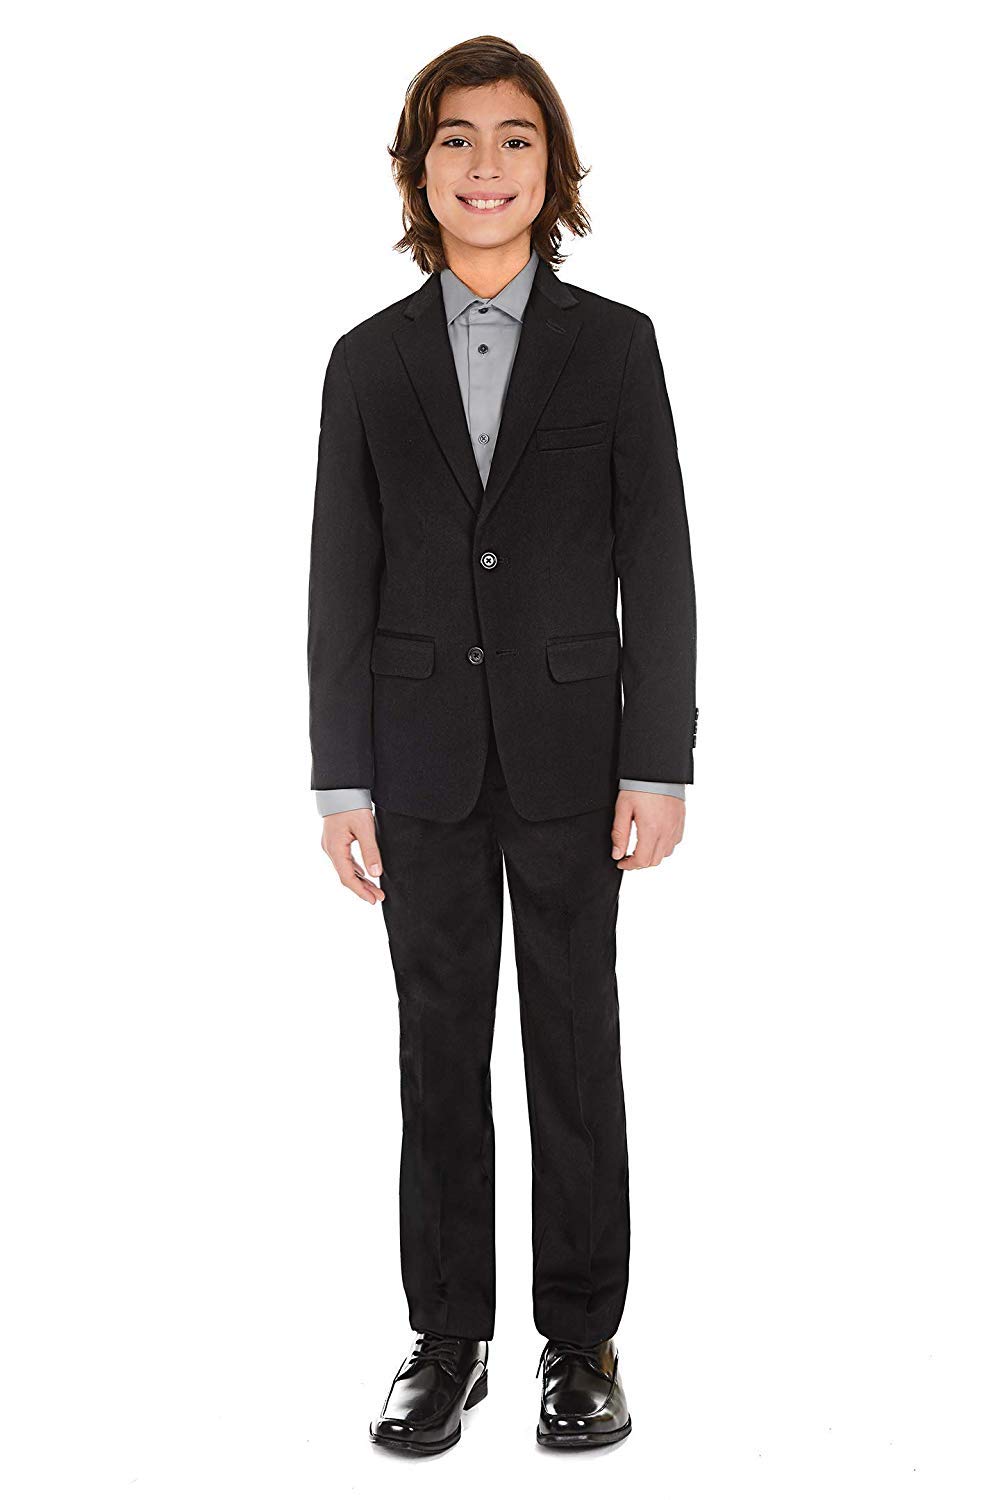 Calvin Klein Boys' 2-Piece Formal Suit Set